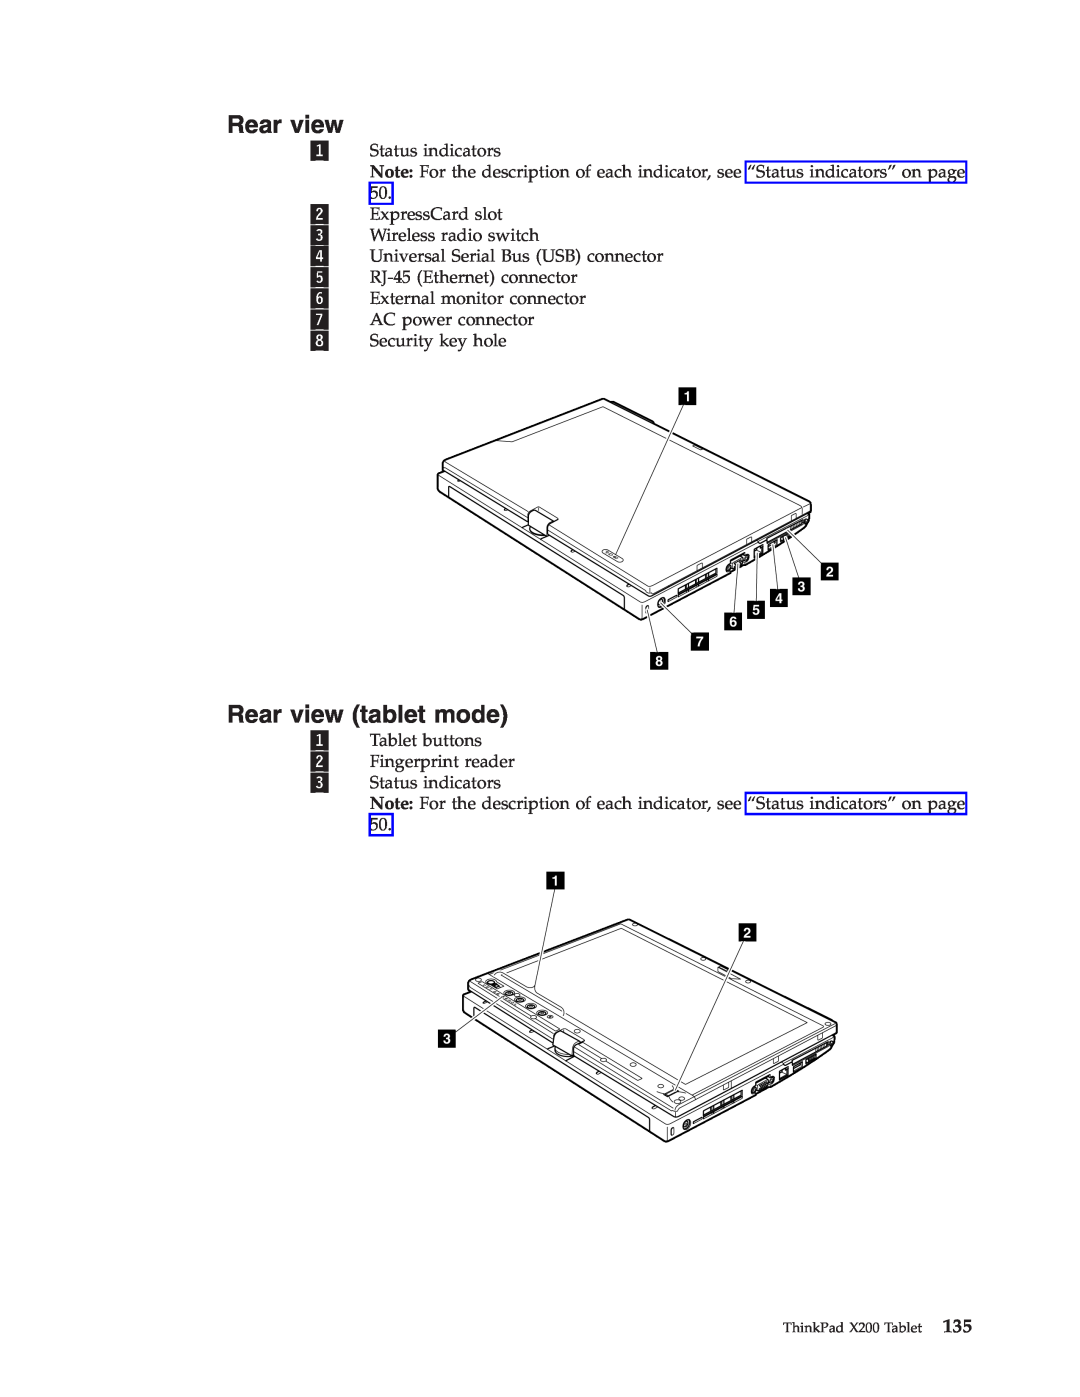 Lenovo X200 manual Rear view tablet mode 